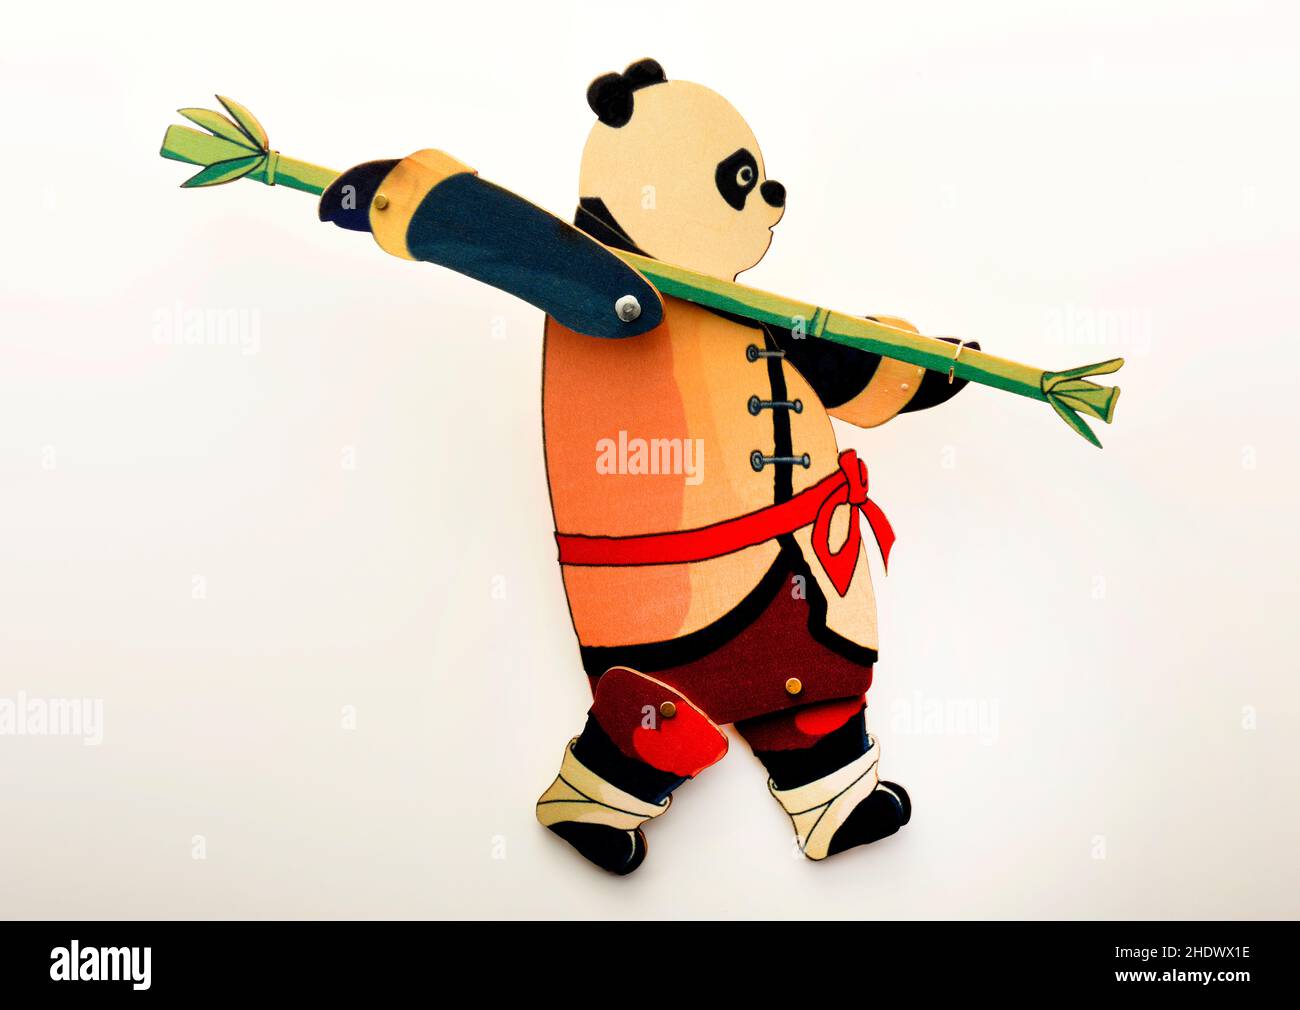 Chinese wooden panda toy Stock Photo